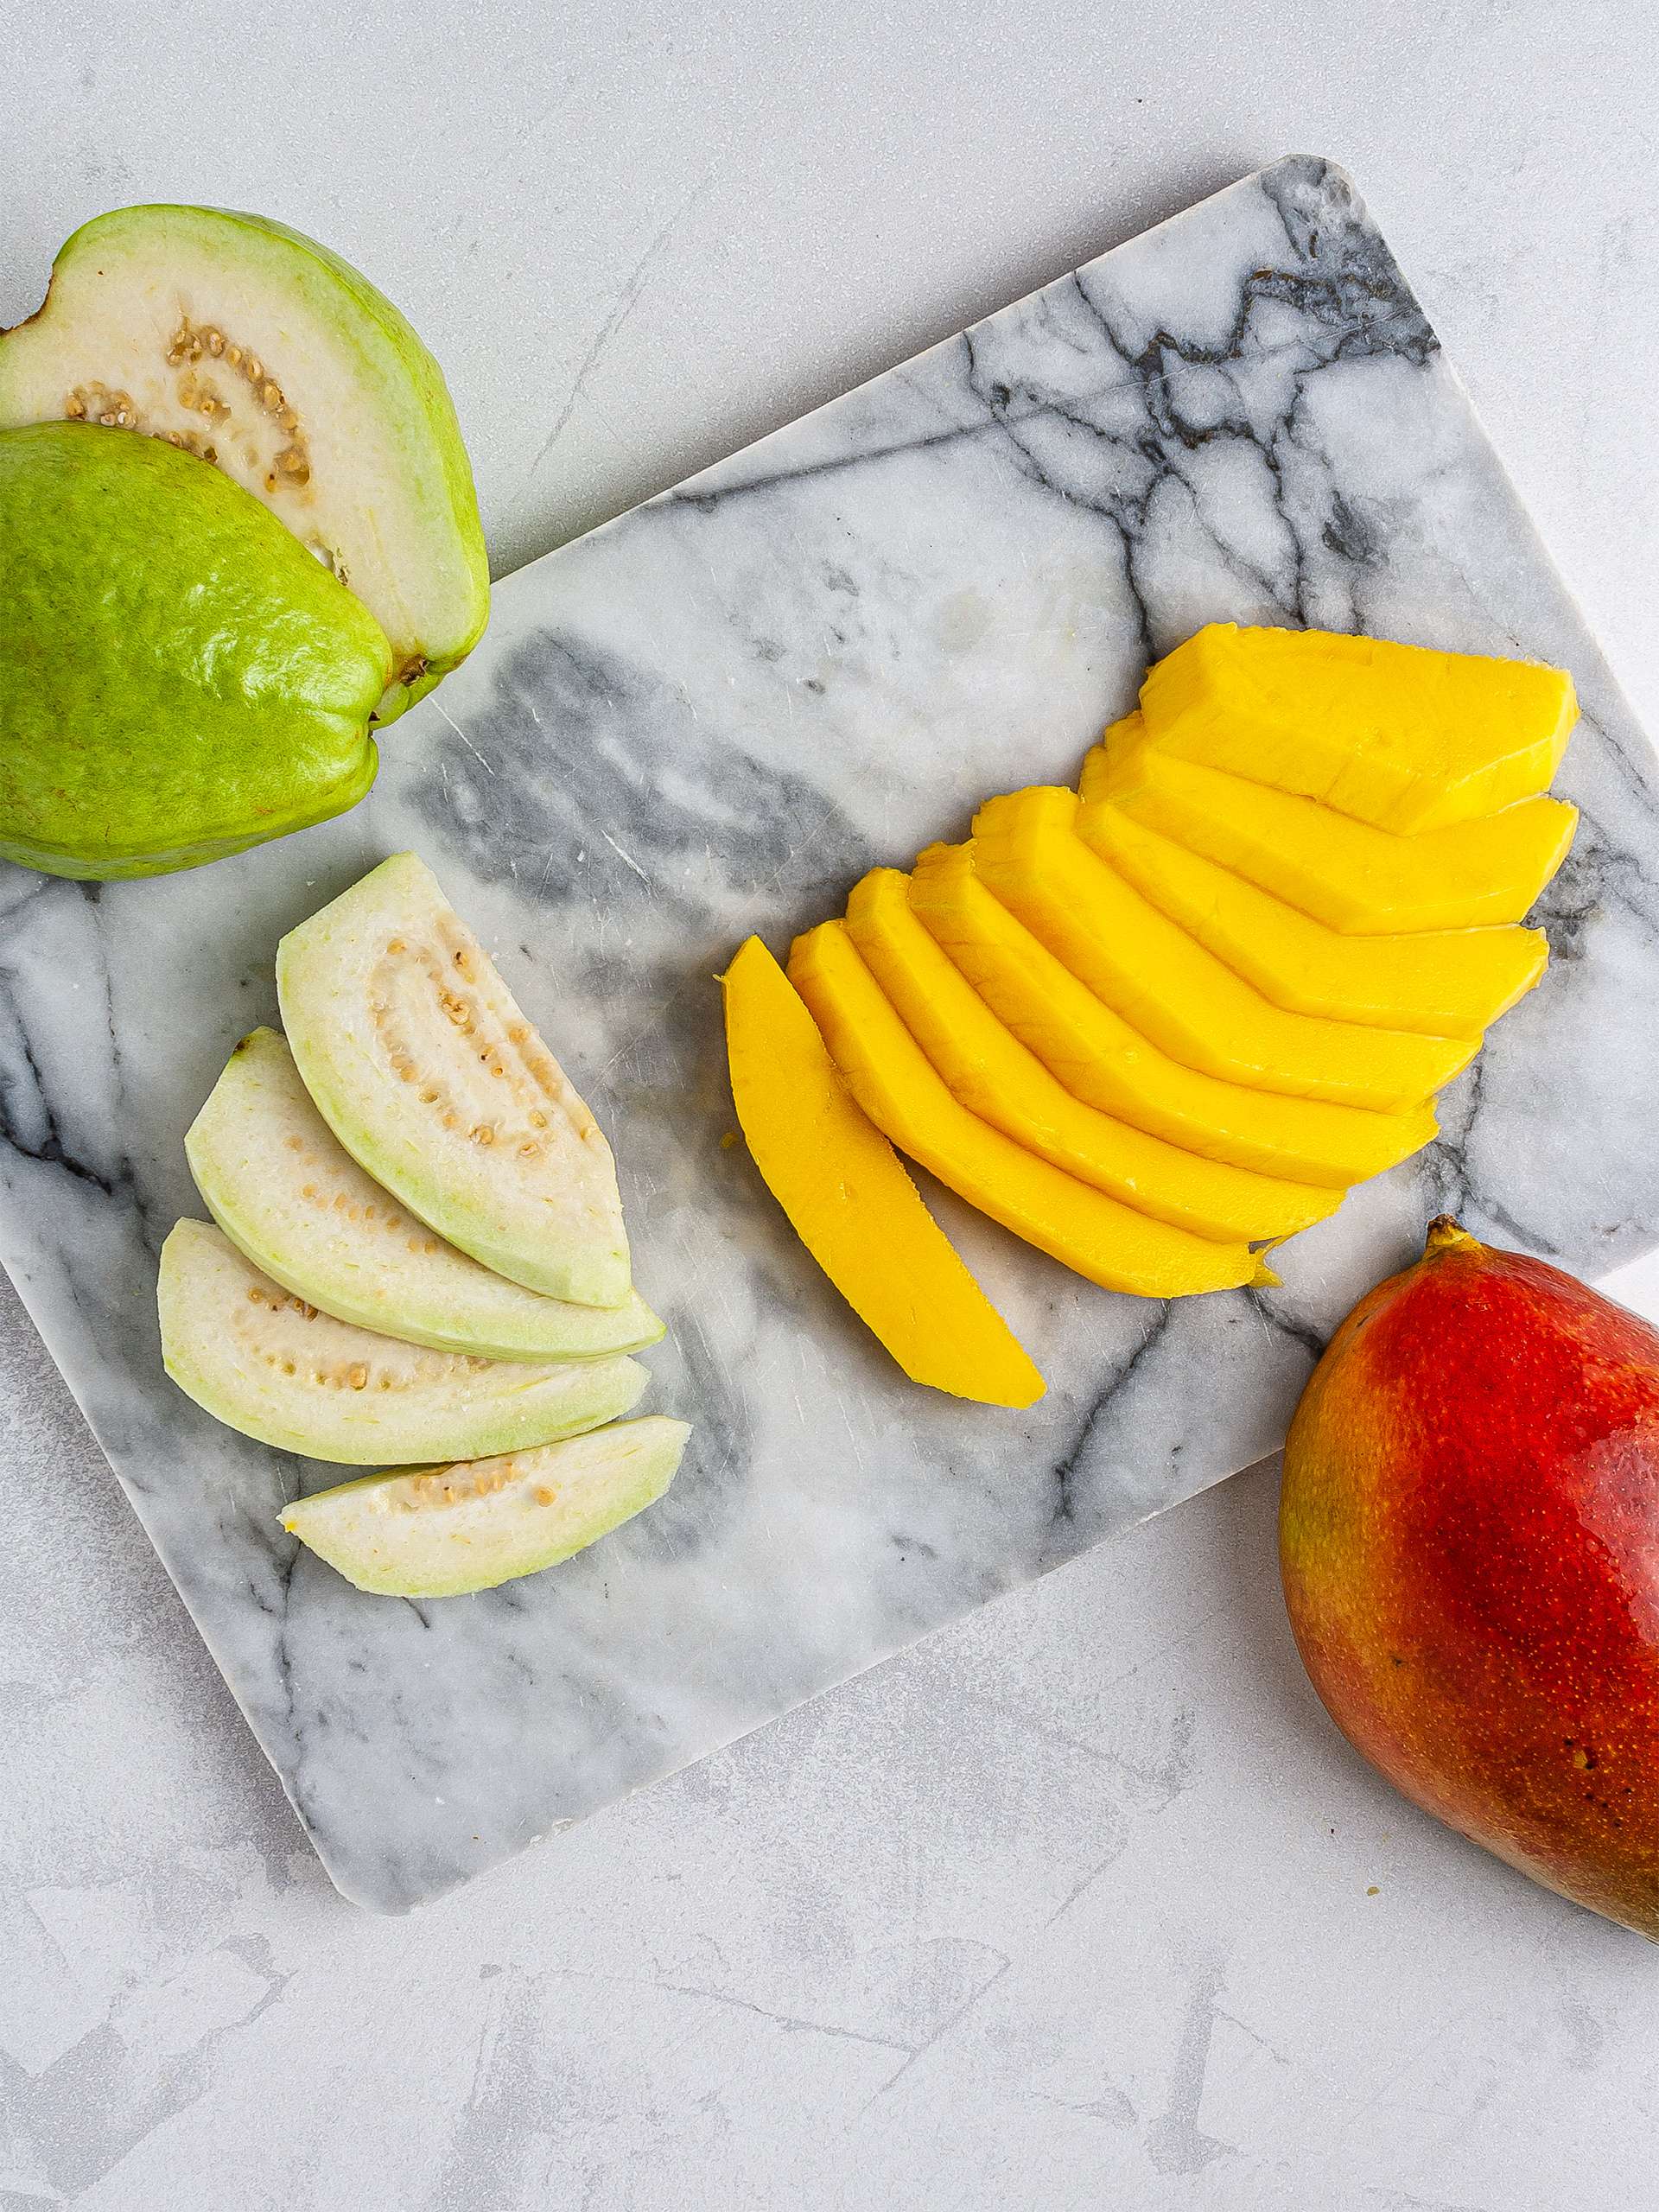 Sliced mango and guava